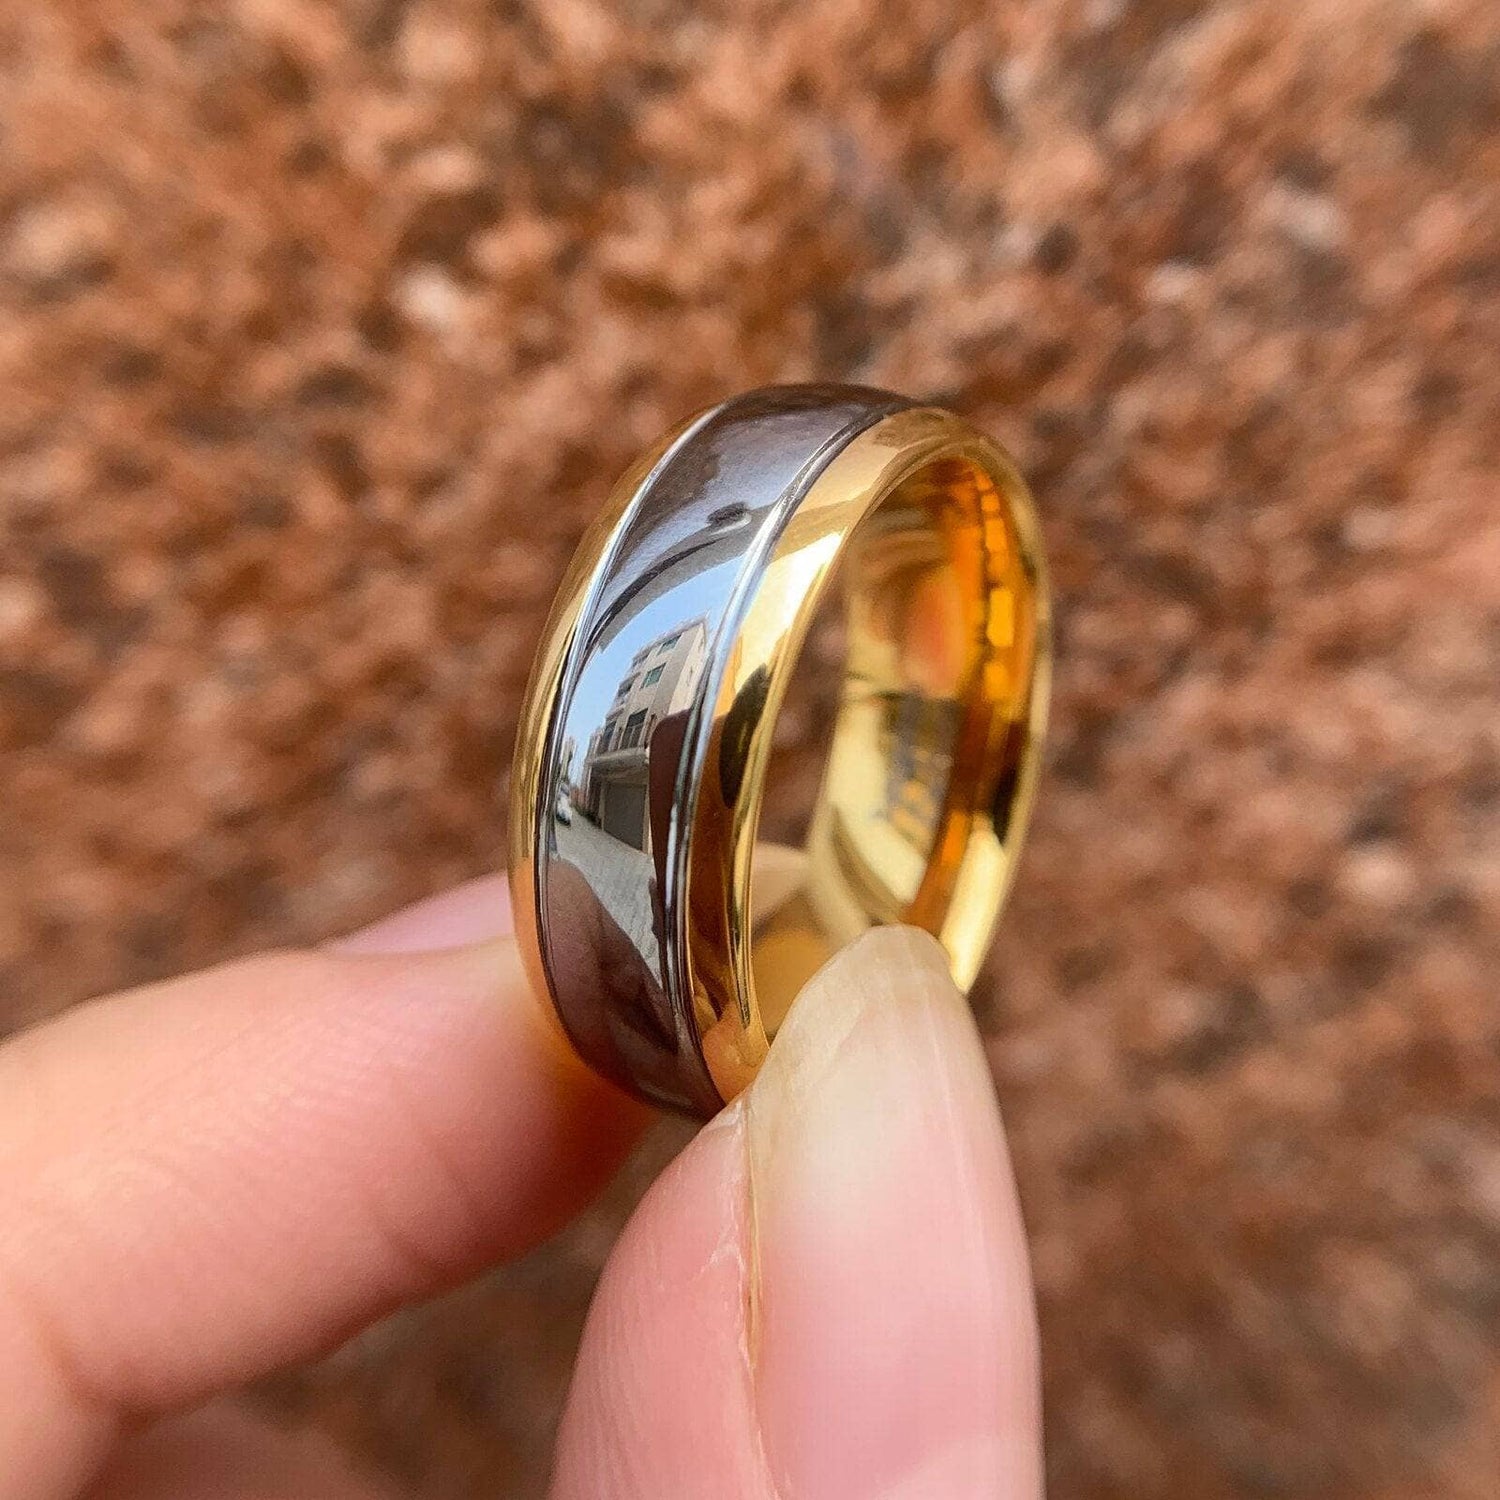 Men's Tungsten Carbide Ring 8mm Wedding Band-Black Diamonds New York